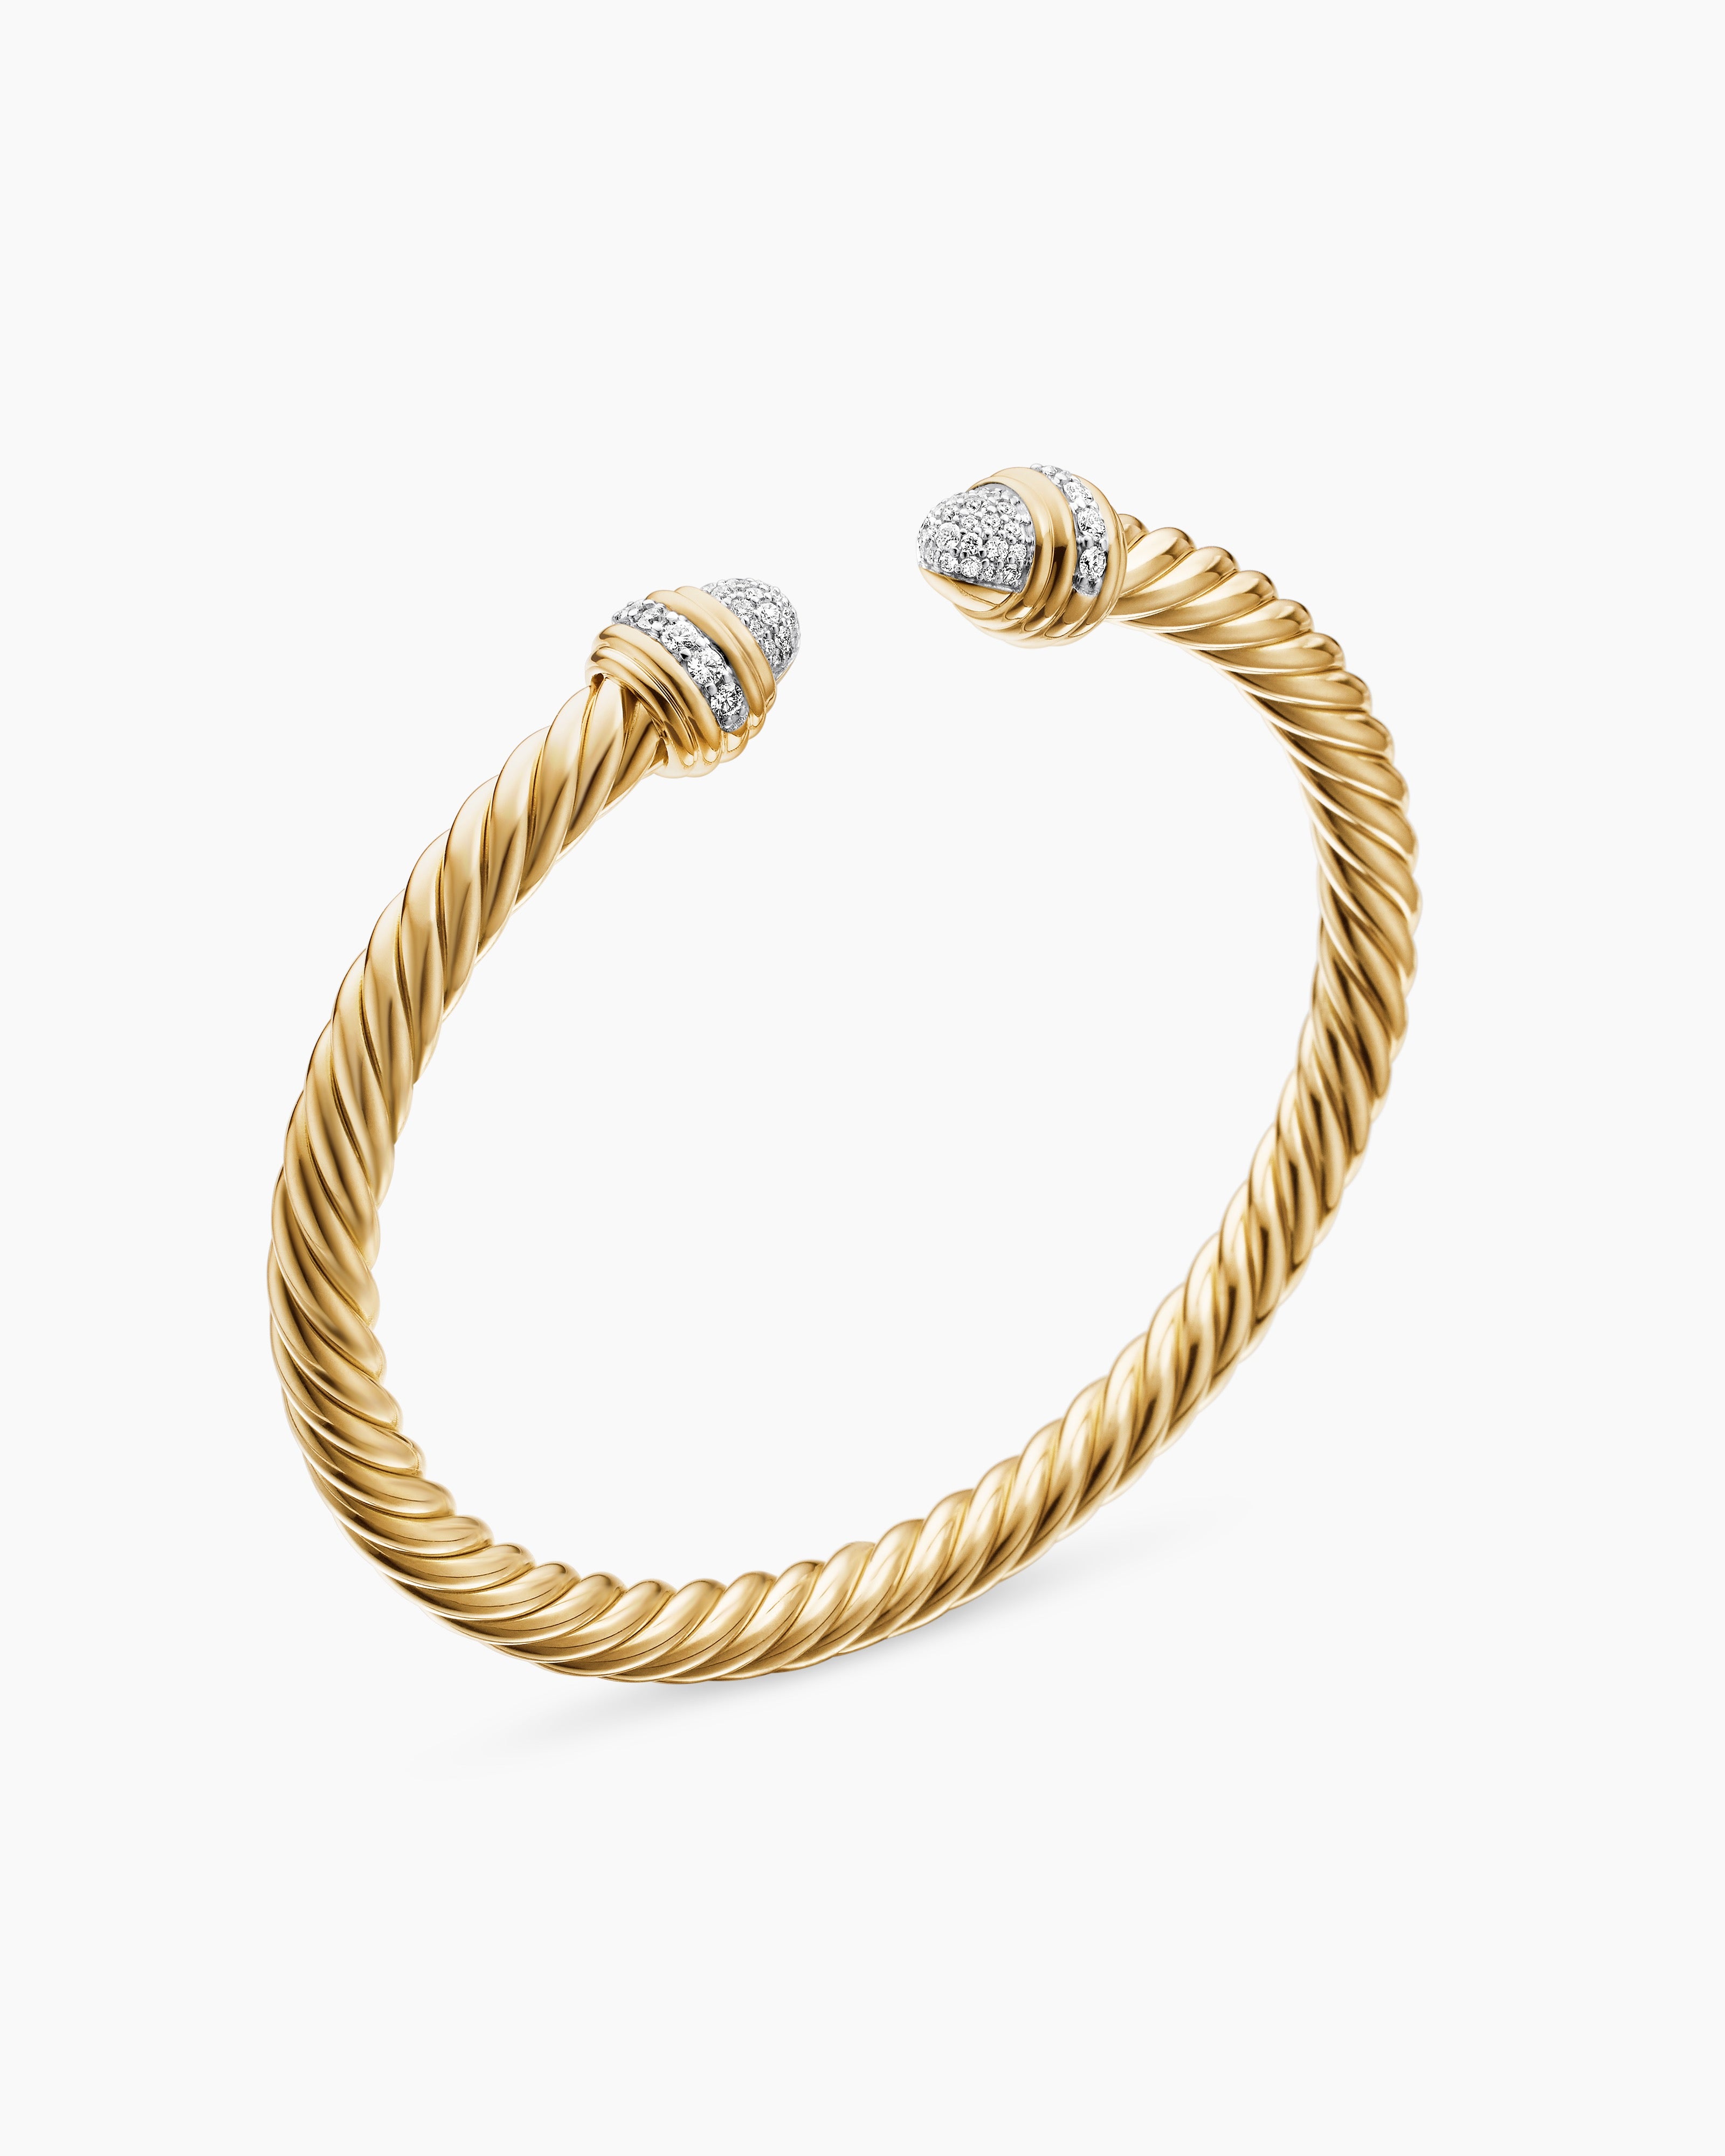 DAVID YURMAN Lexington 18-karat gold diamond bracelet | NET-A-PORTER